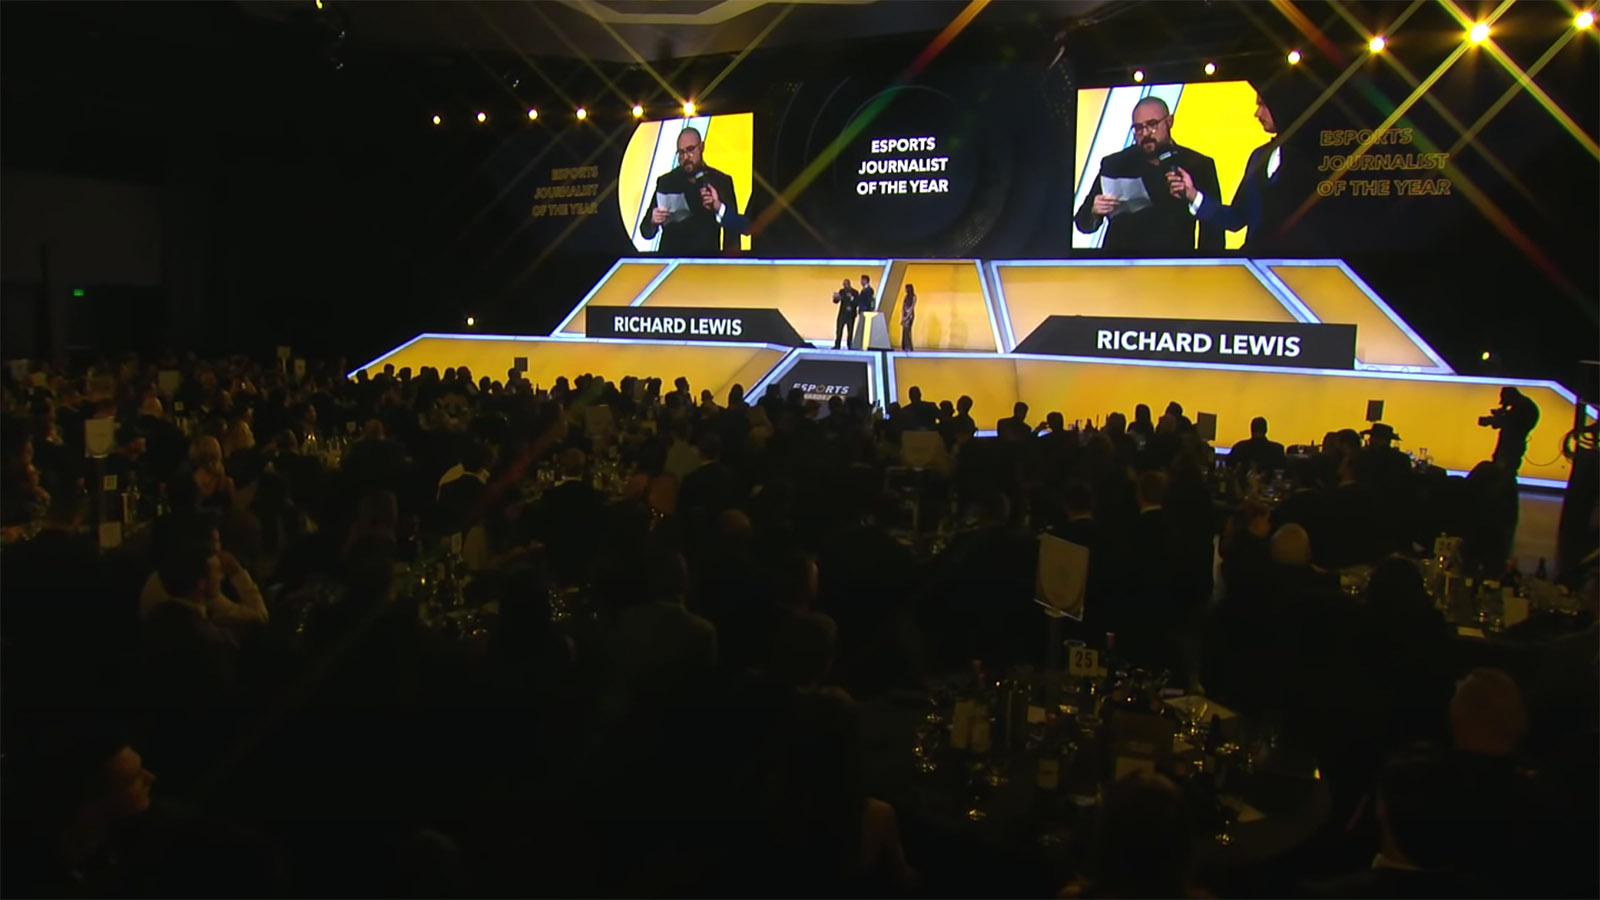 Richard Lewis Esports Awards Journalist of the year